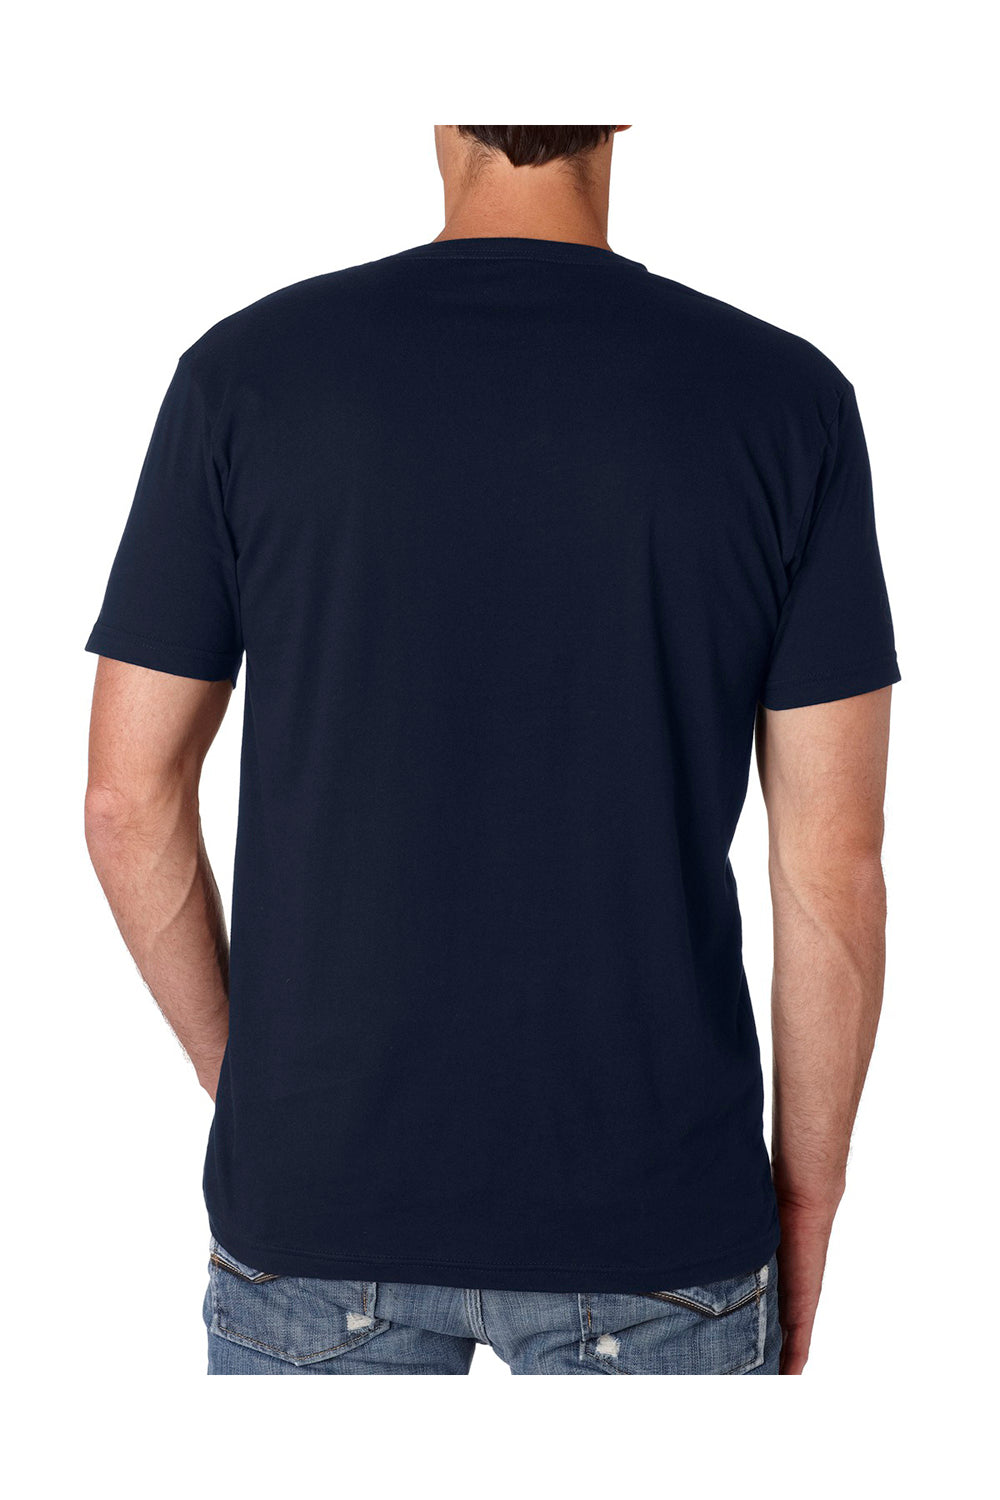 Next Level N3200 Mens Fine Jersey Short Sleeve V-Neck T-Shirt Navy Blue Back